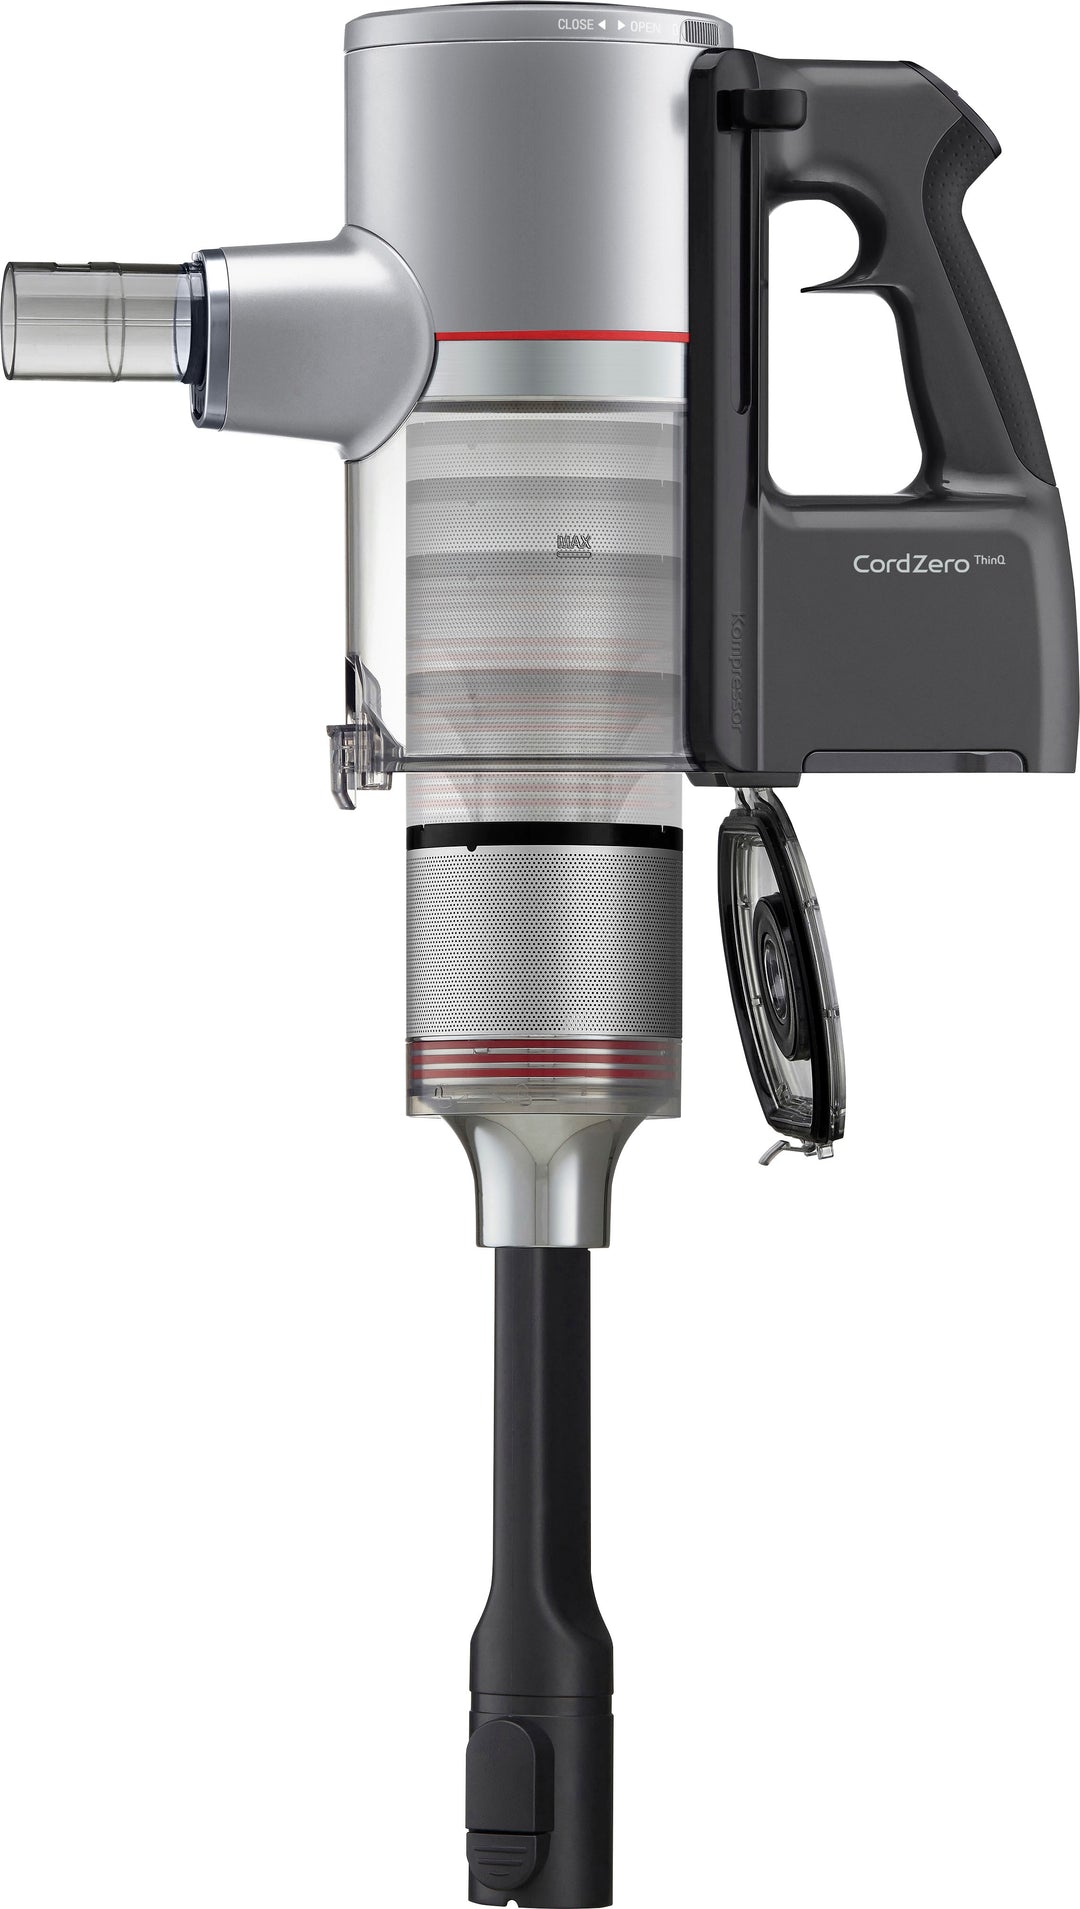 LG - CordZero Cordless Stick Vacuum with Kompressor technology - Matte Silver_13